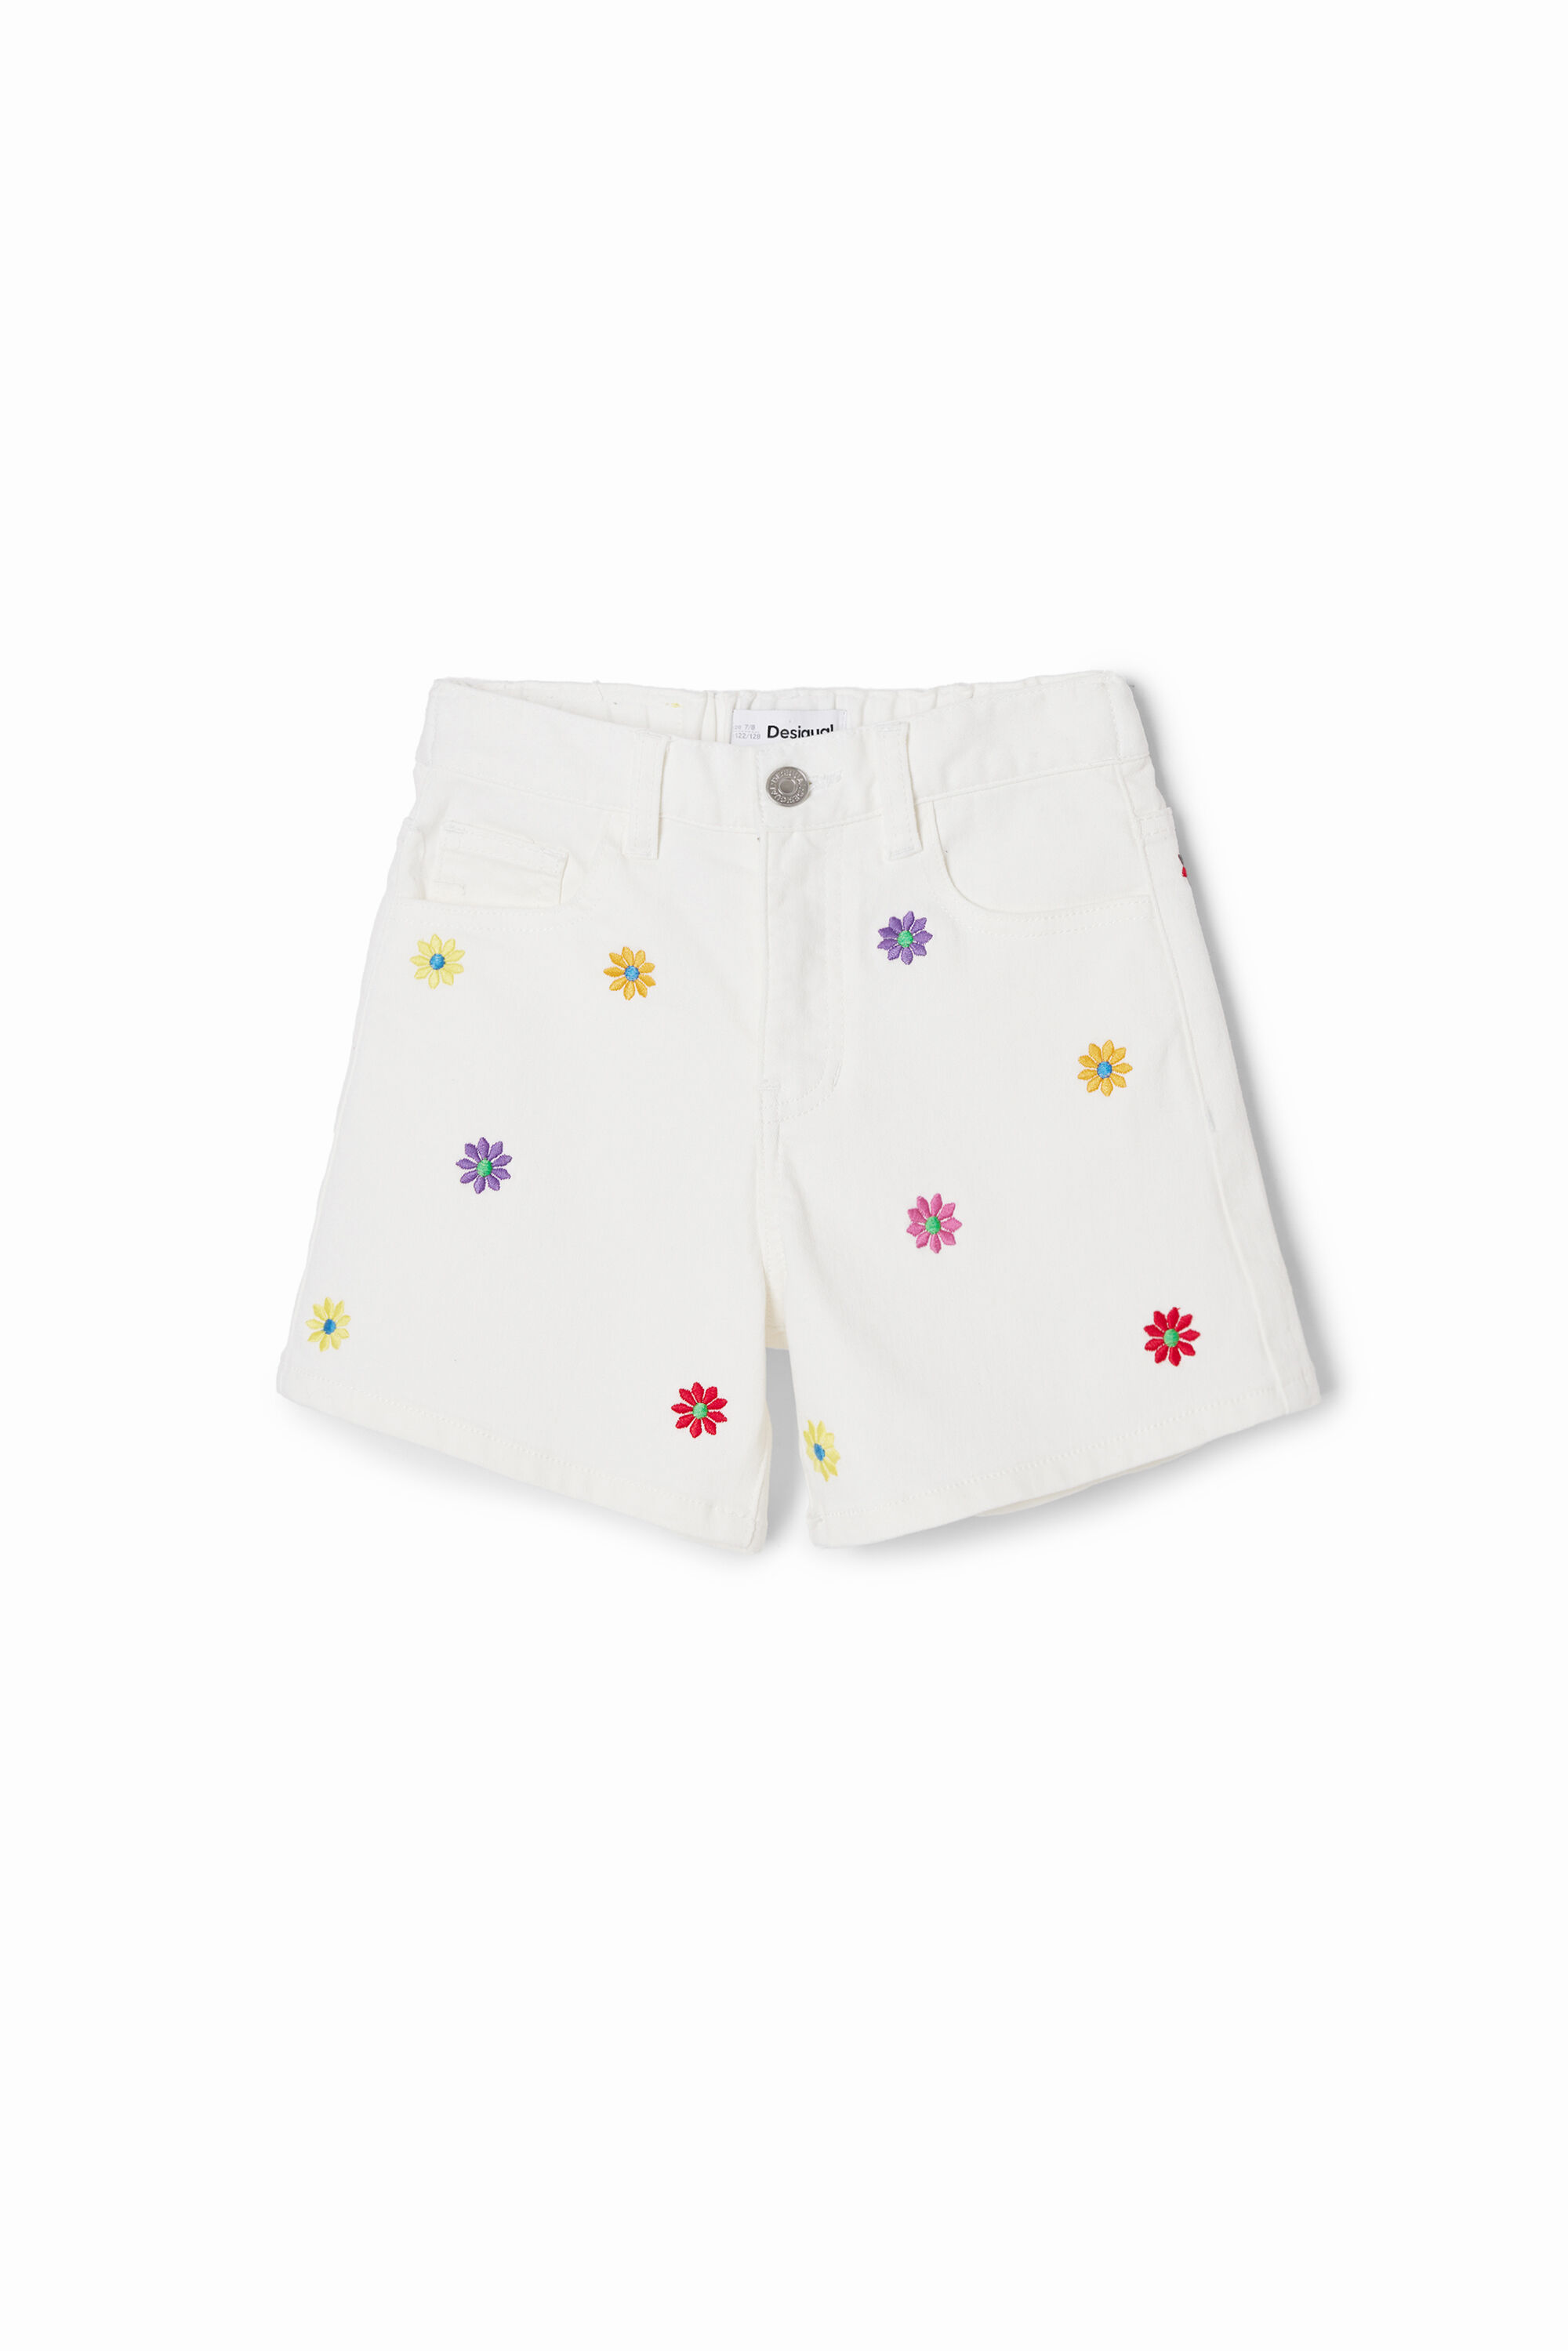 Daisy denim shorts - WHITE - 9/10